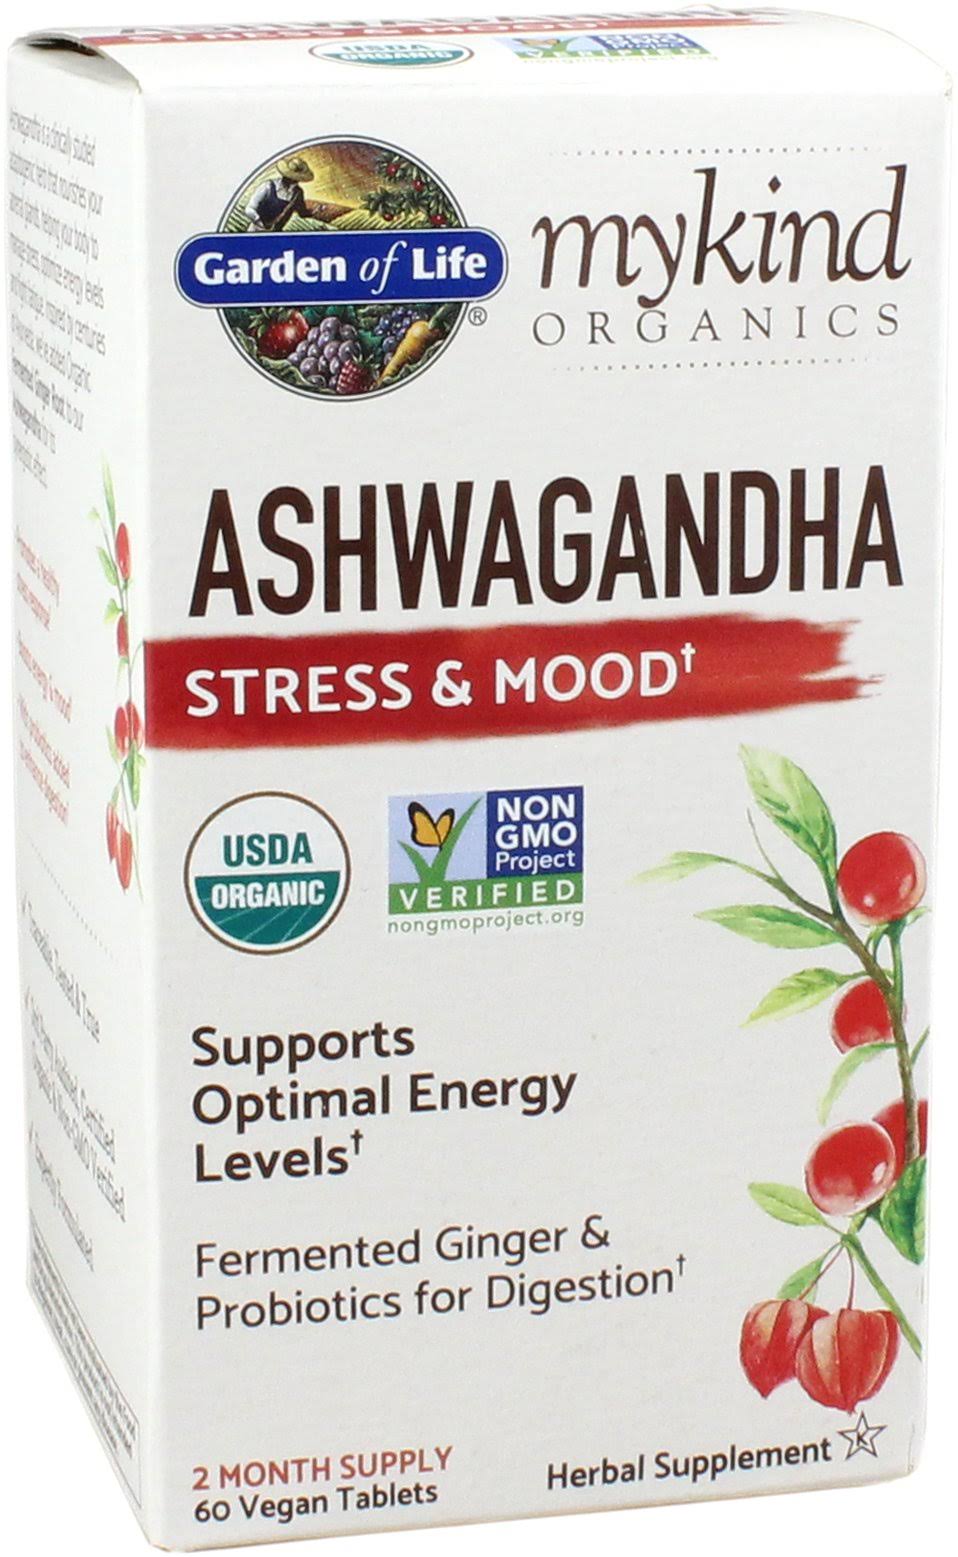 mykind Organics, Ashwagandha, Stress & Mood, 60 Vegan Tablets, Garden of Life